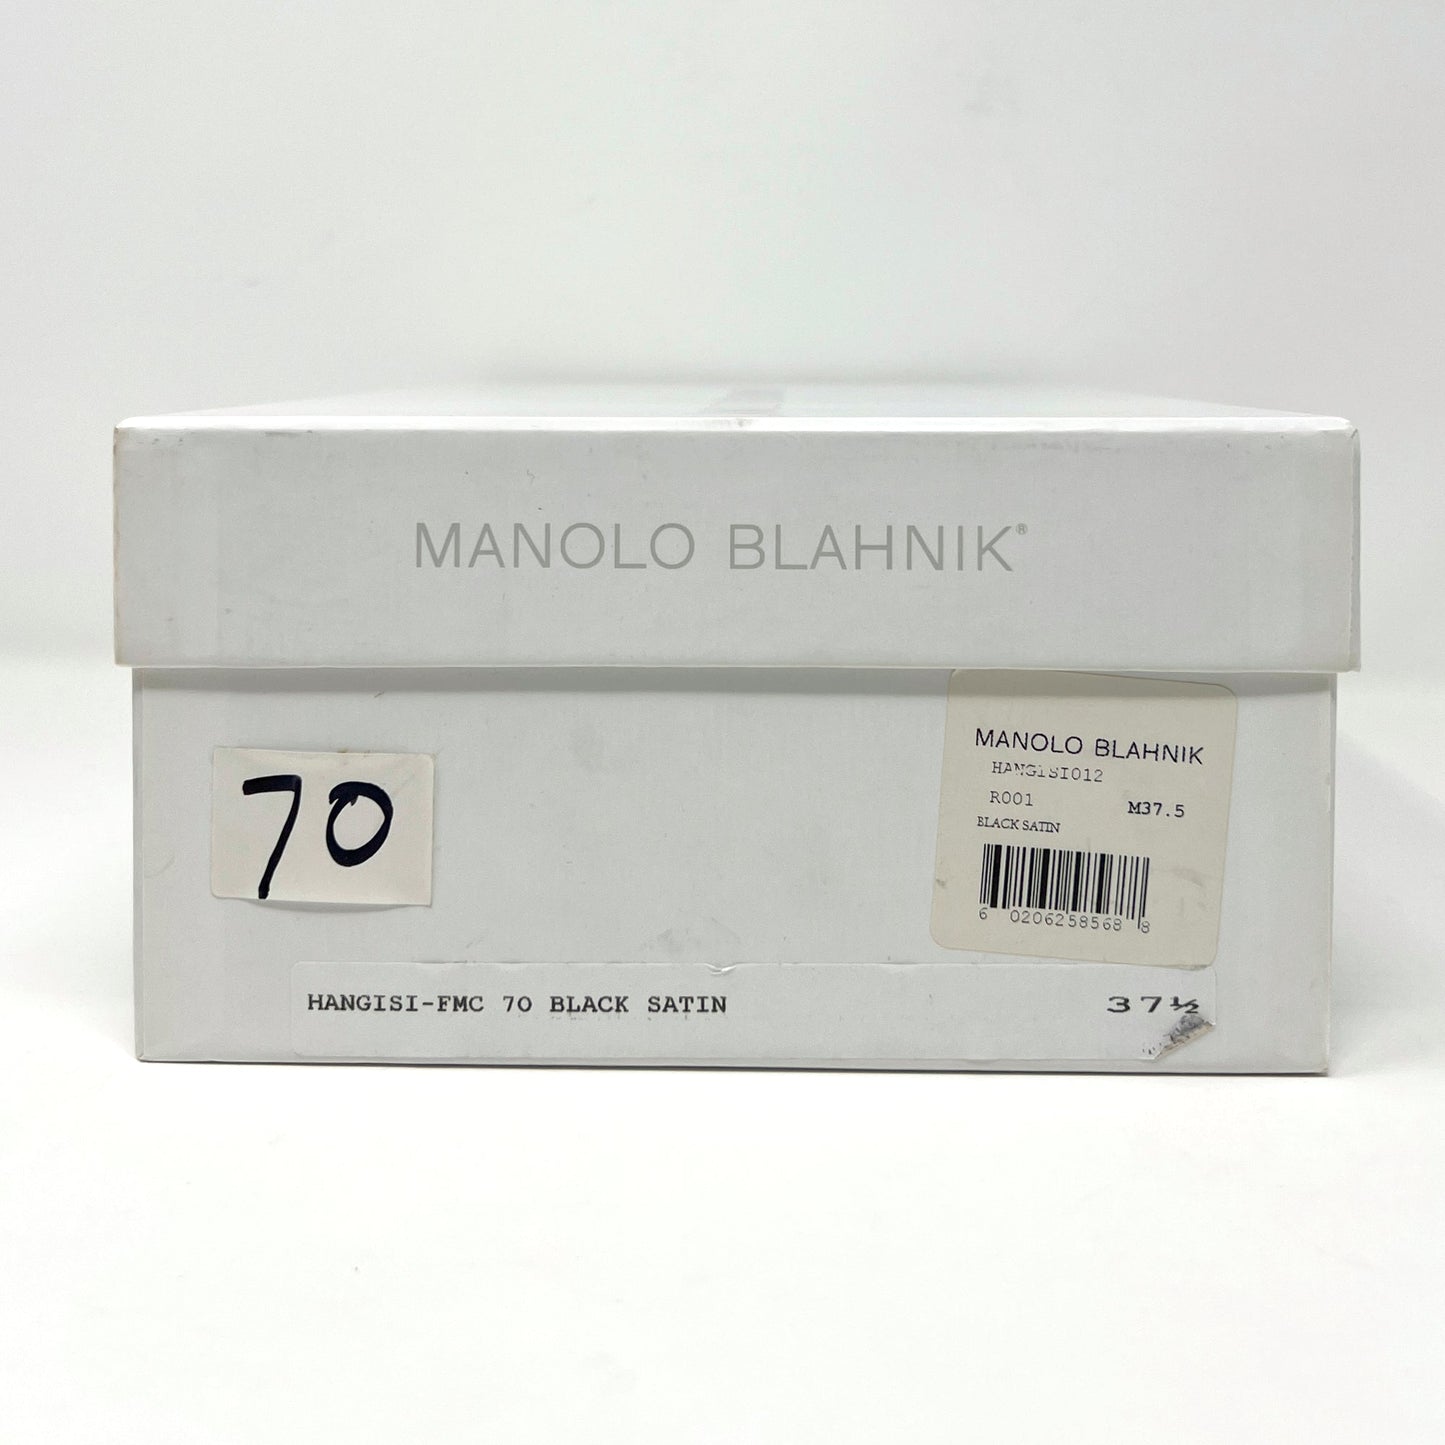 Manolo Blahnik Black Satin Hangisi Crystal Buckle Mid Heel Pointed Pumps Size EU 37.5